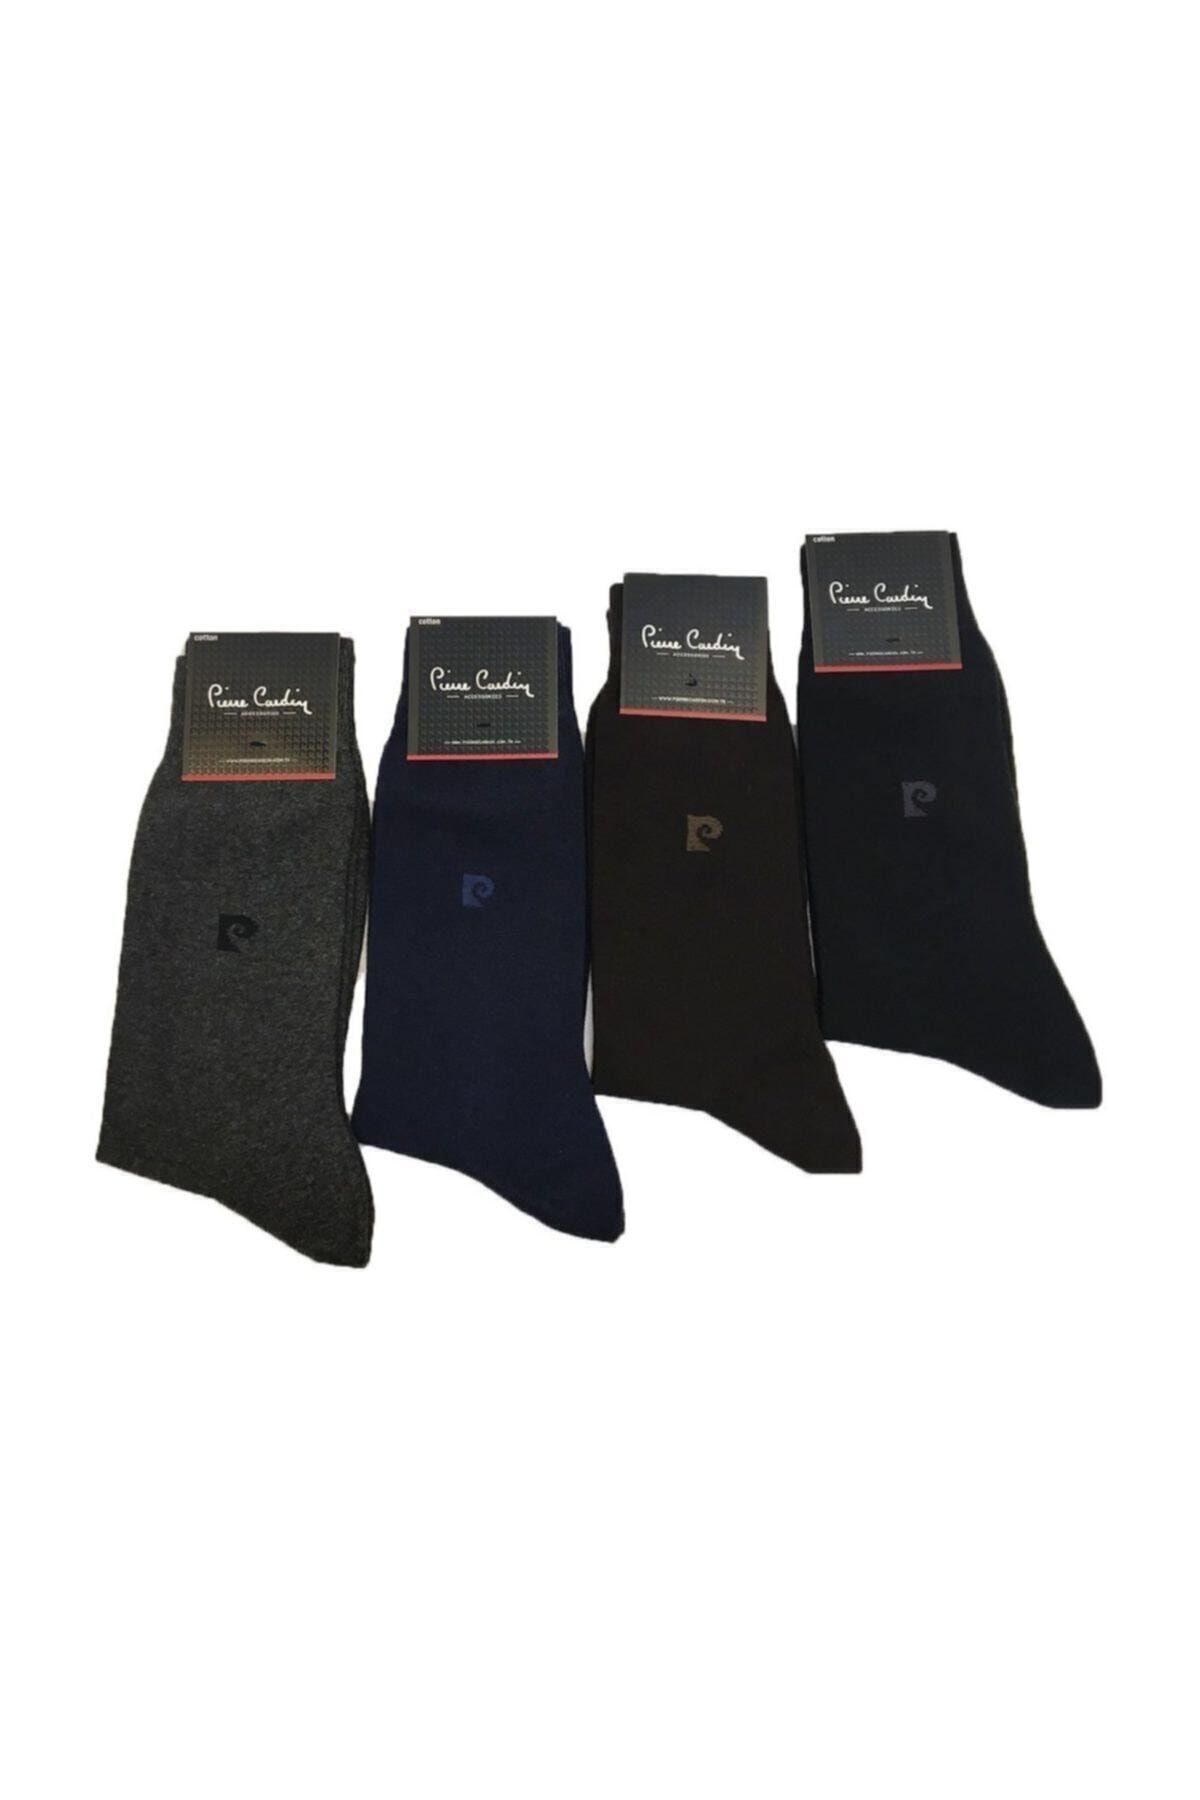 Pierre Cardin Erkek Bambu Siyah Çorap 12'li Çorap